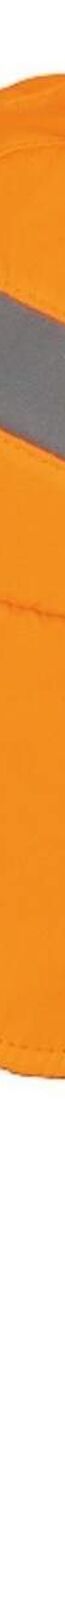 Casquette d'hiver - Adulte - KP222 - orange fluo